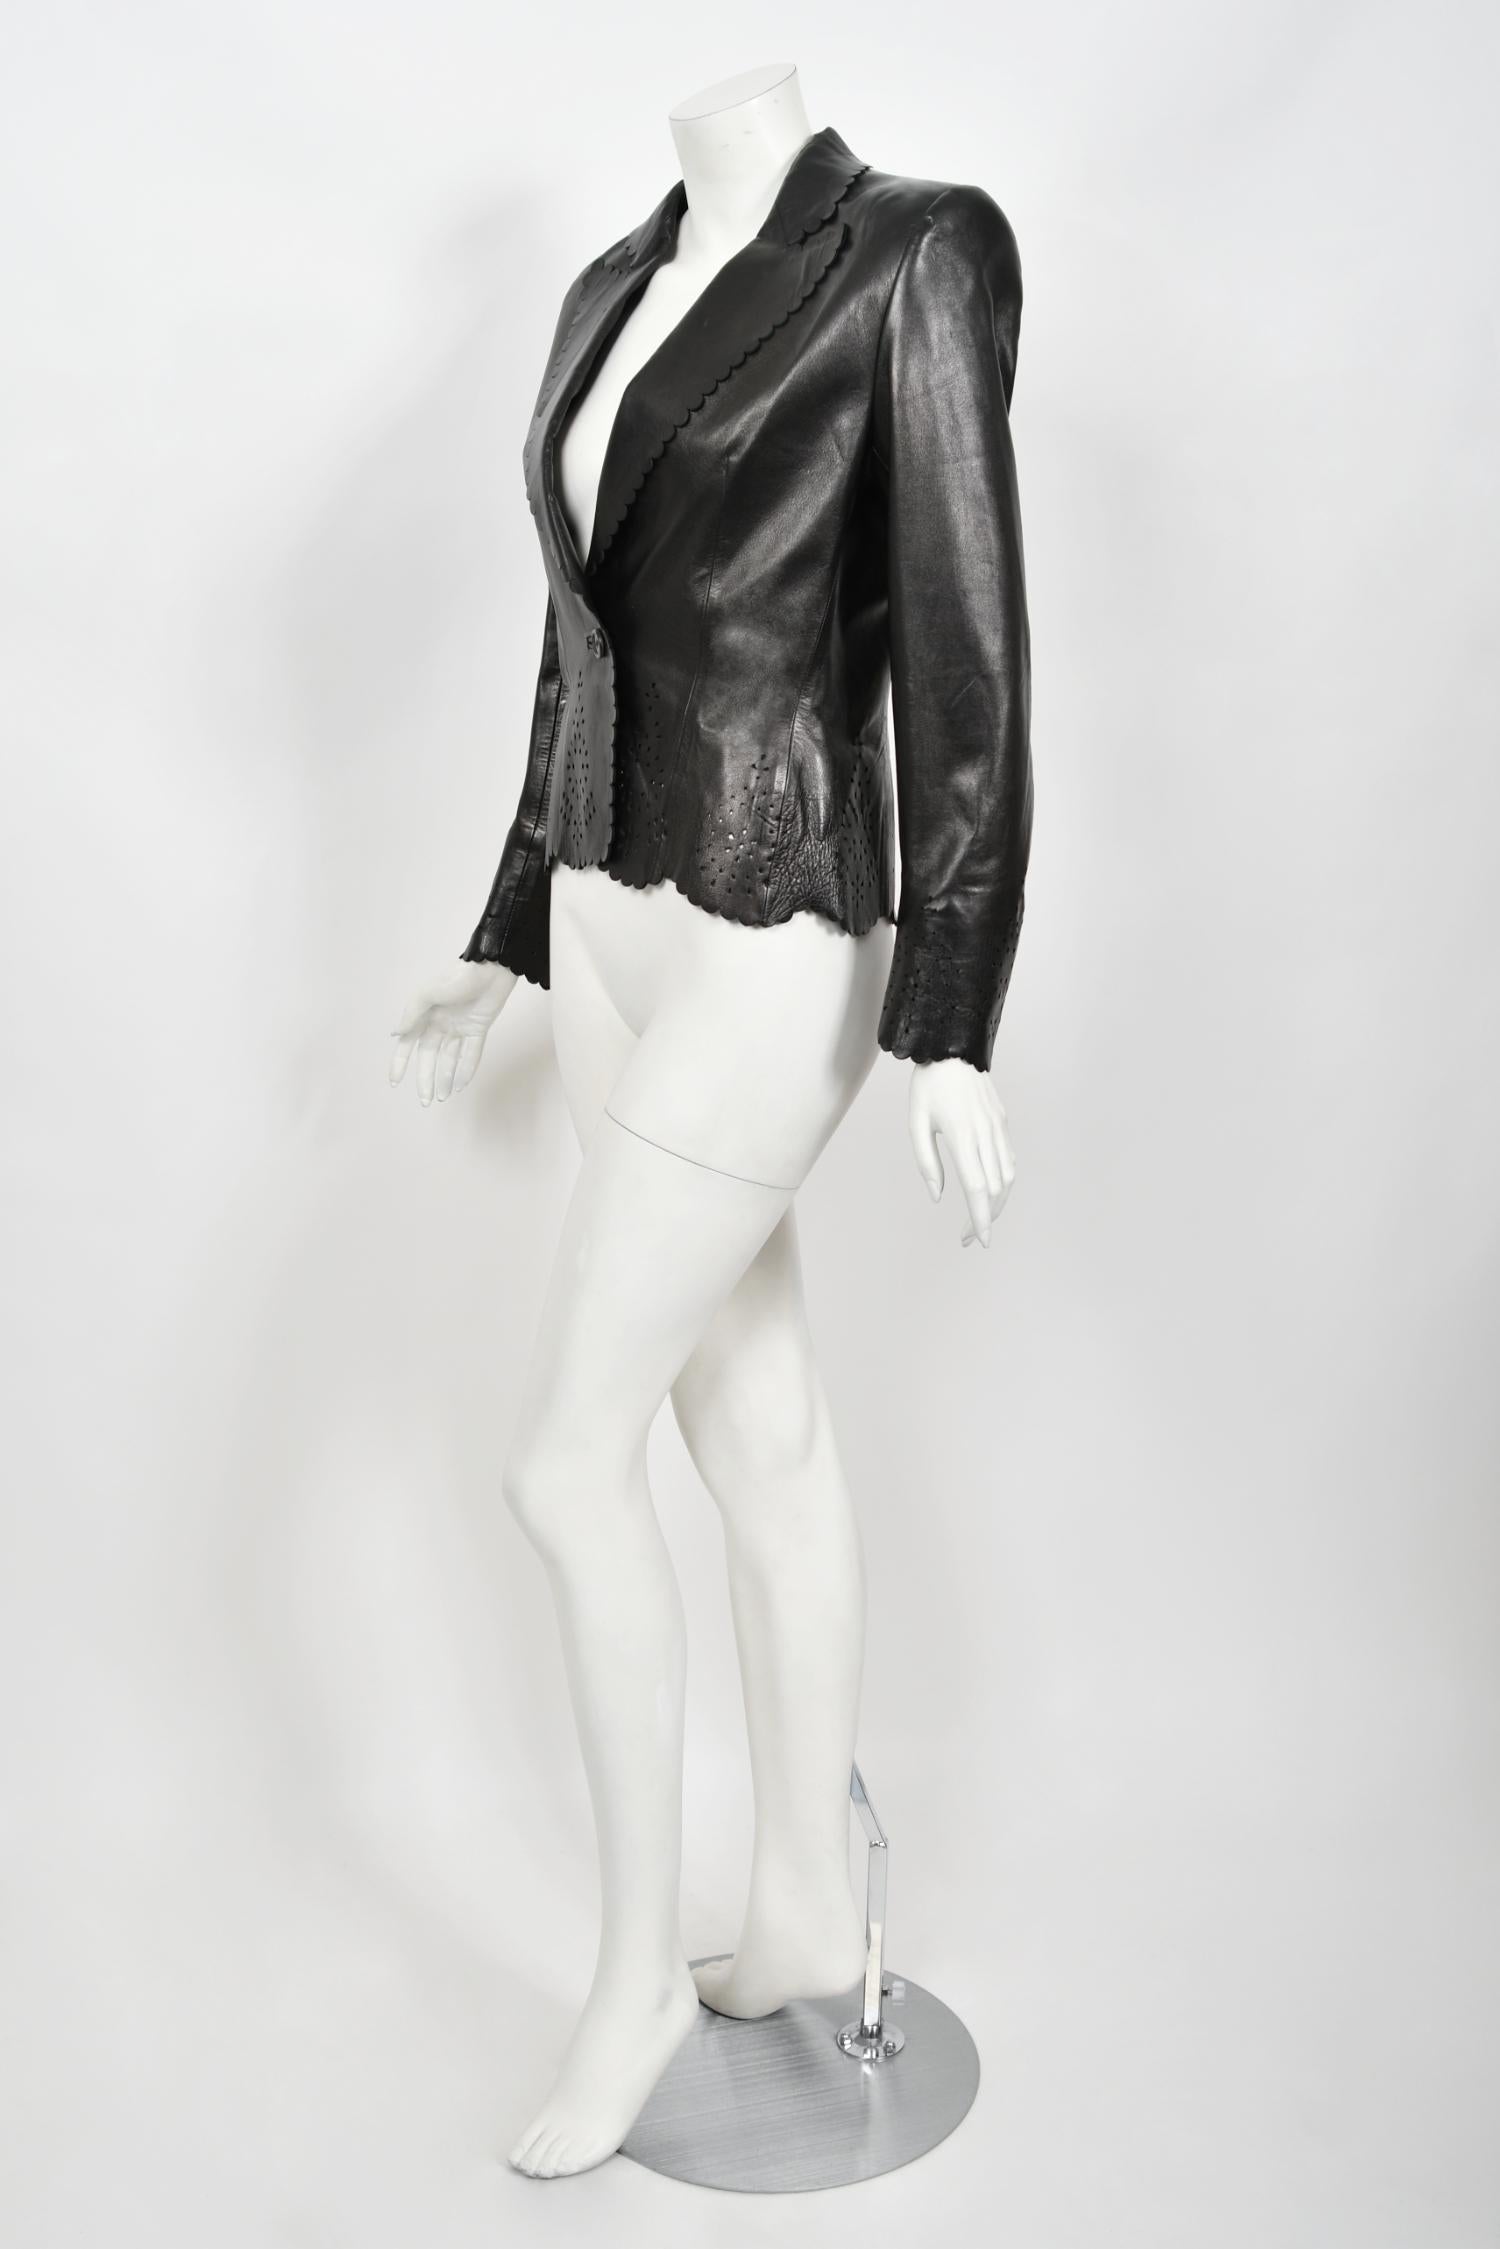 1997 Alexander Mcqueen for Givenchy Runway Black Leather Cutwork Blazer Jacket 2